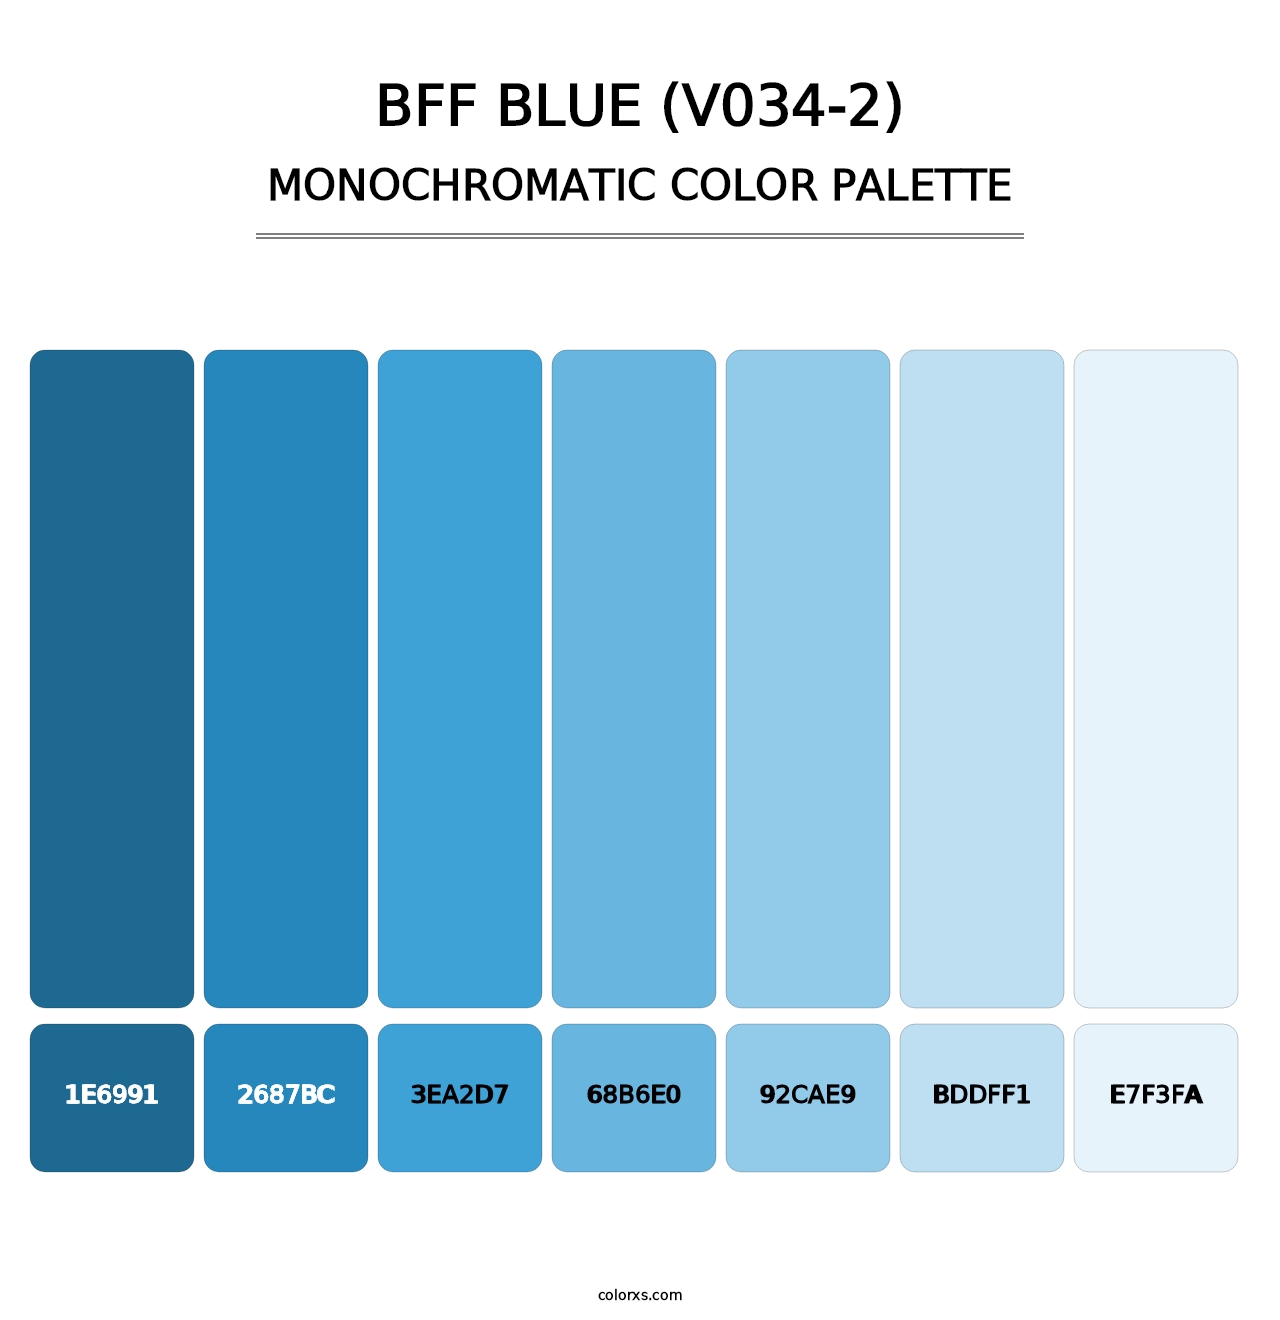 BFF Blue (V034-2) - Monochromatic Color Palette